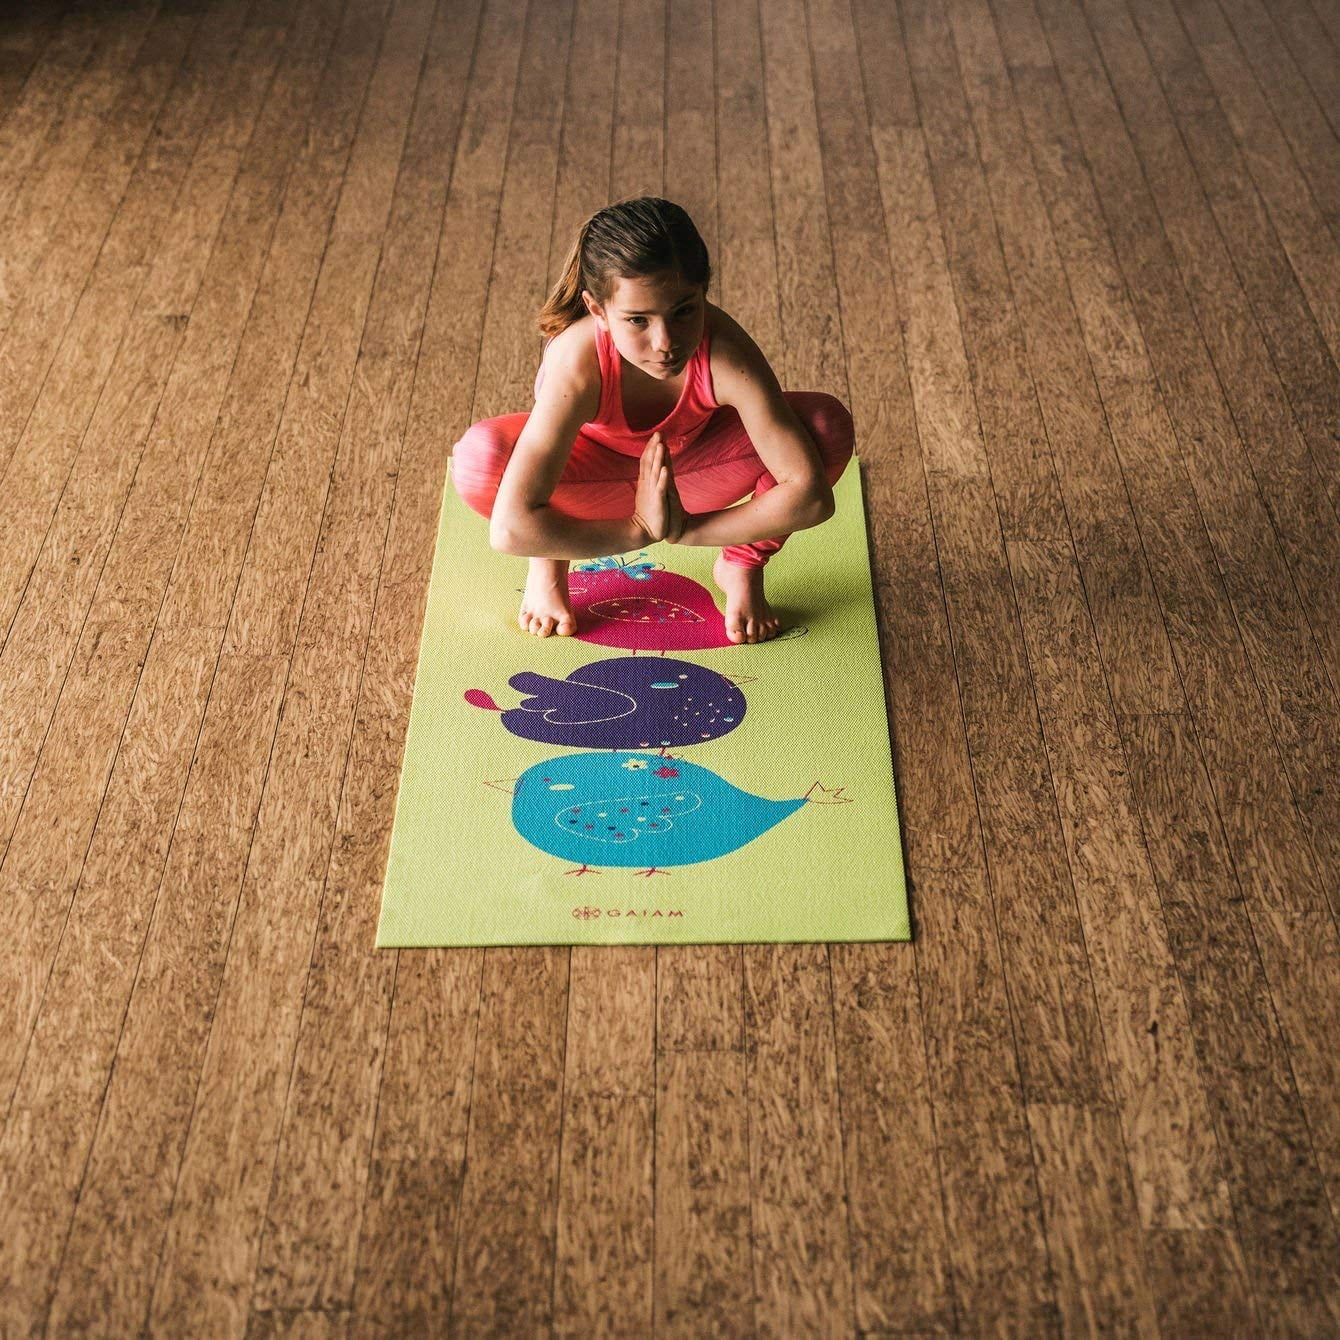 Gaiam Kids Yoga Mat, Birdsong, 4 mm 